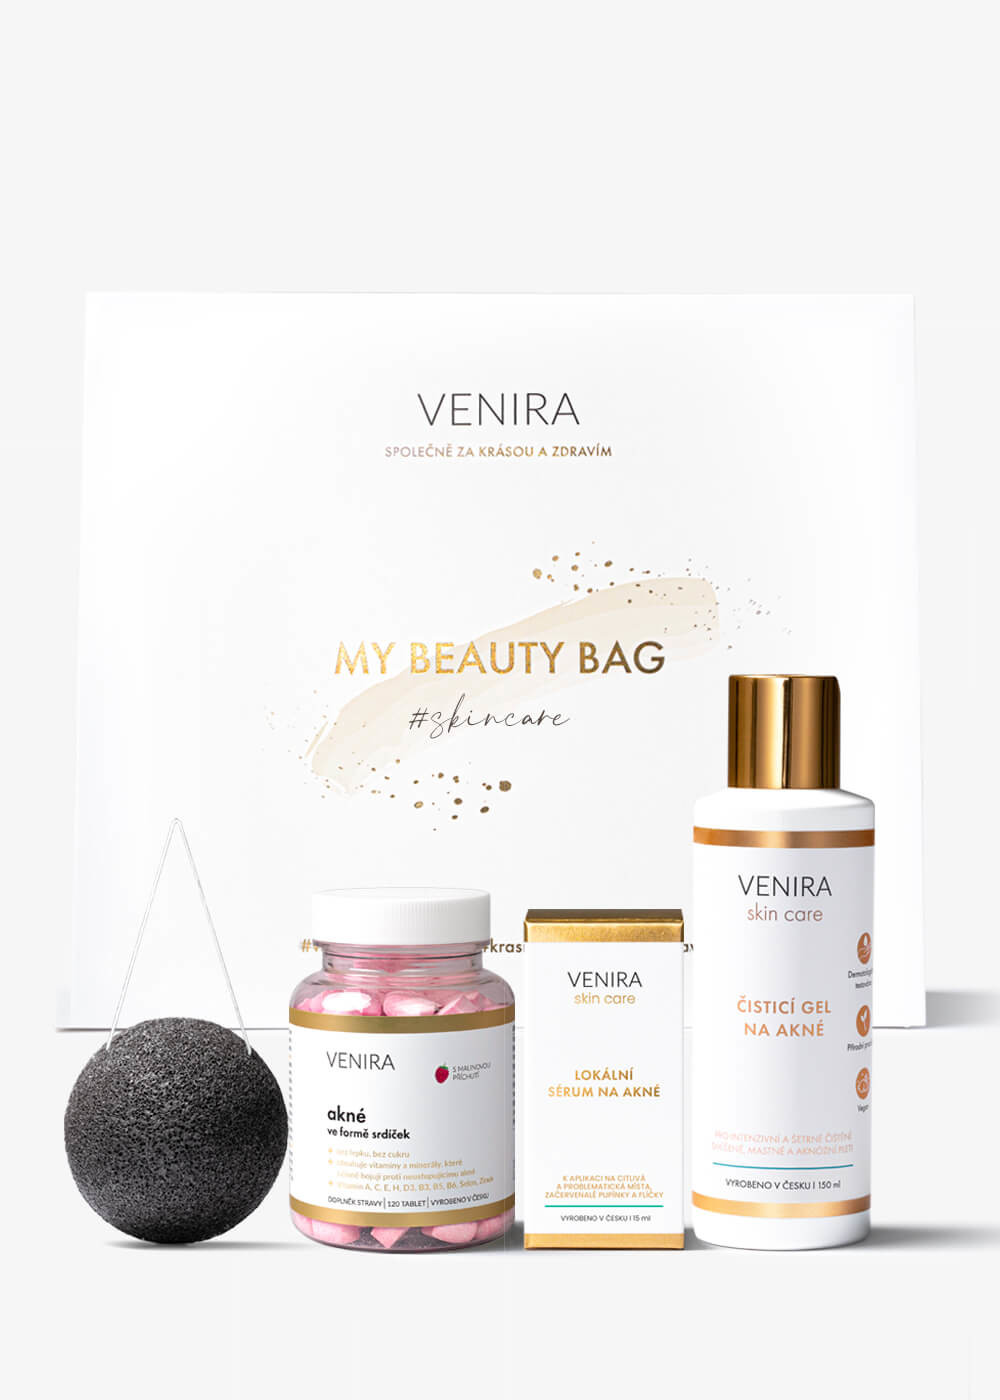 VENIRA beauty bag, dárková sada pro boj proti akné - srdíčka proti akné, čisticí gel na akné, lokální sérum na akné, konjaková houbička